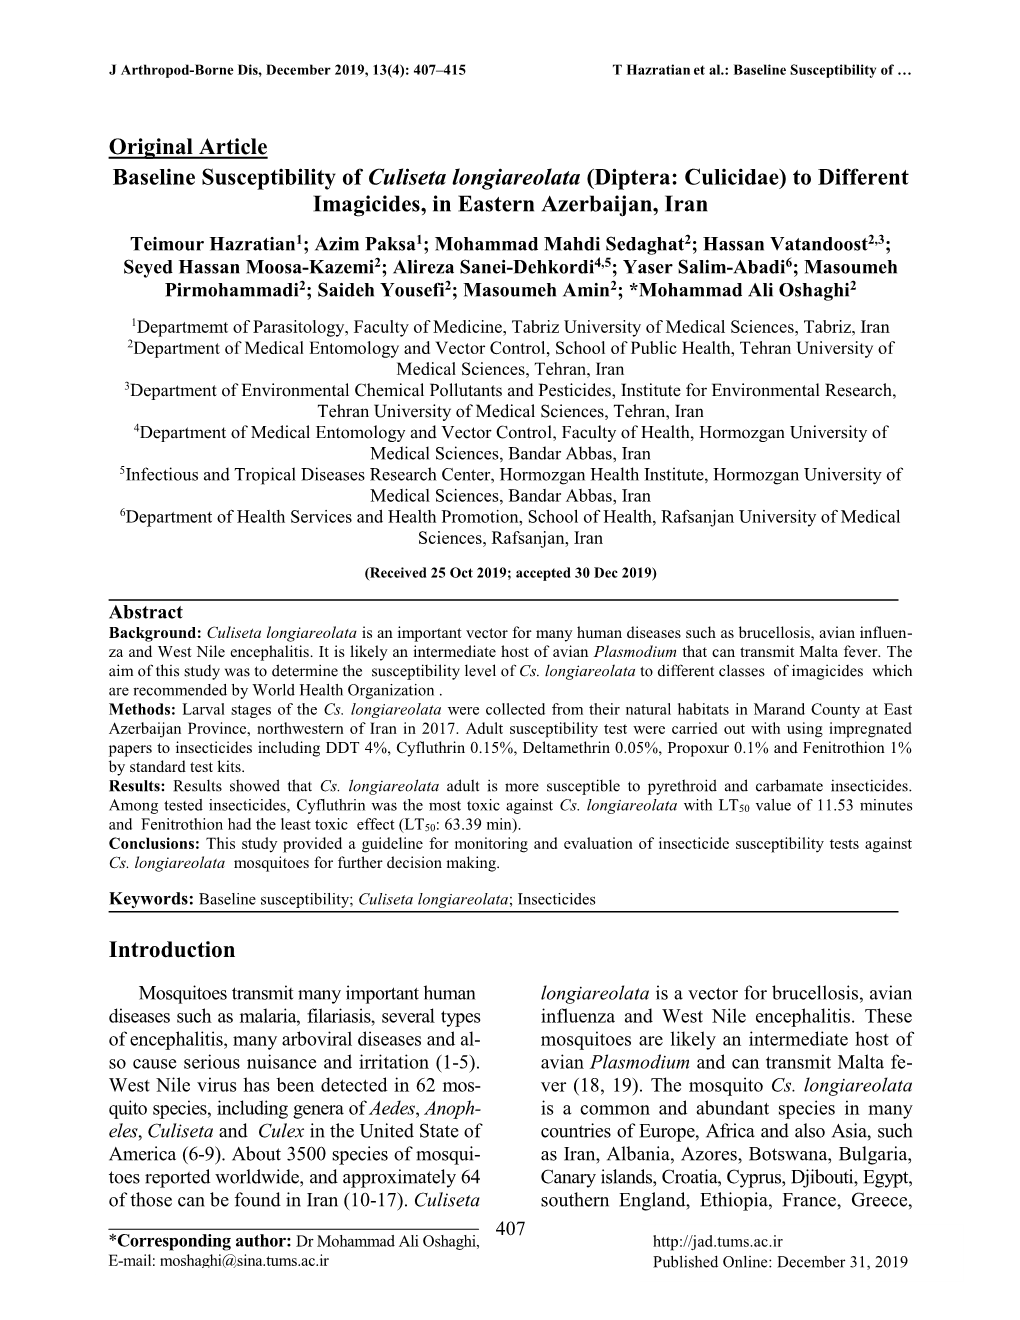 Original Article Baseline Susceptibility of Culiseta Longiareolata (Diptera: Culicidae) to Different Imagicides, in Eastern Azerbaijan, Iran